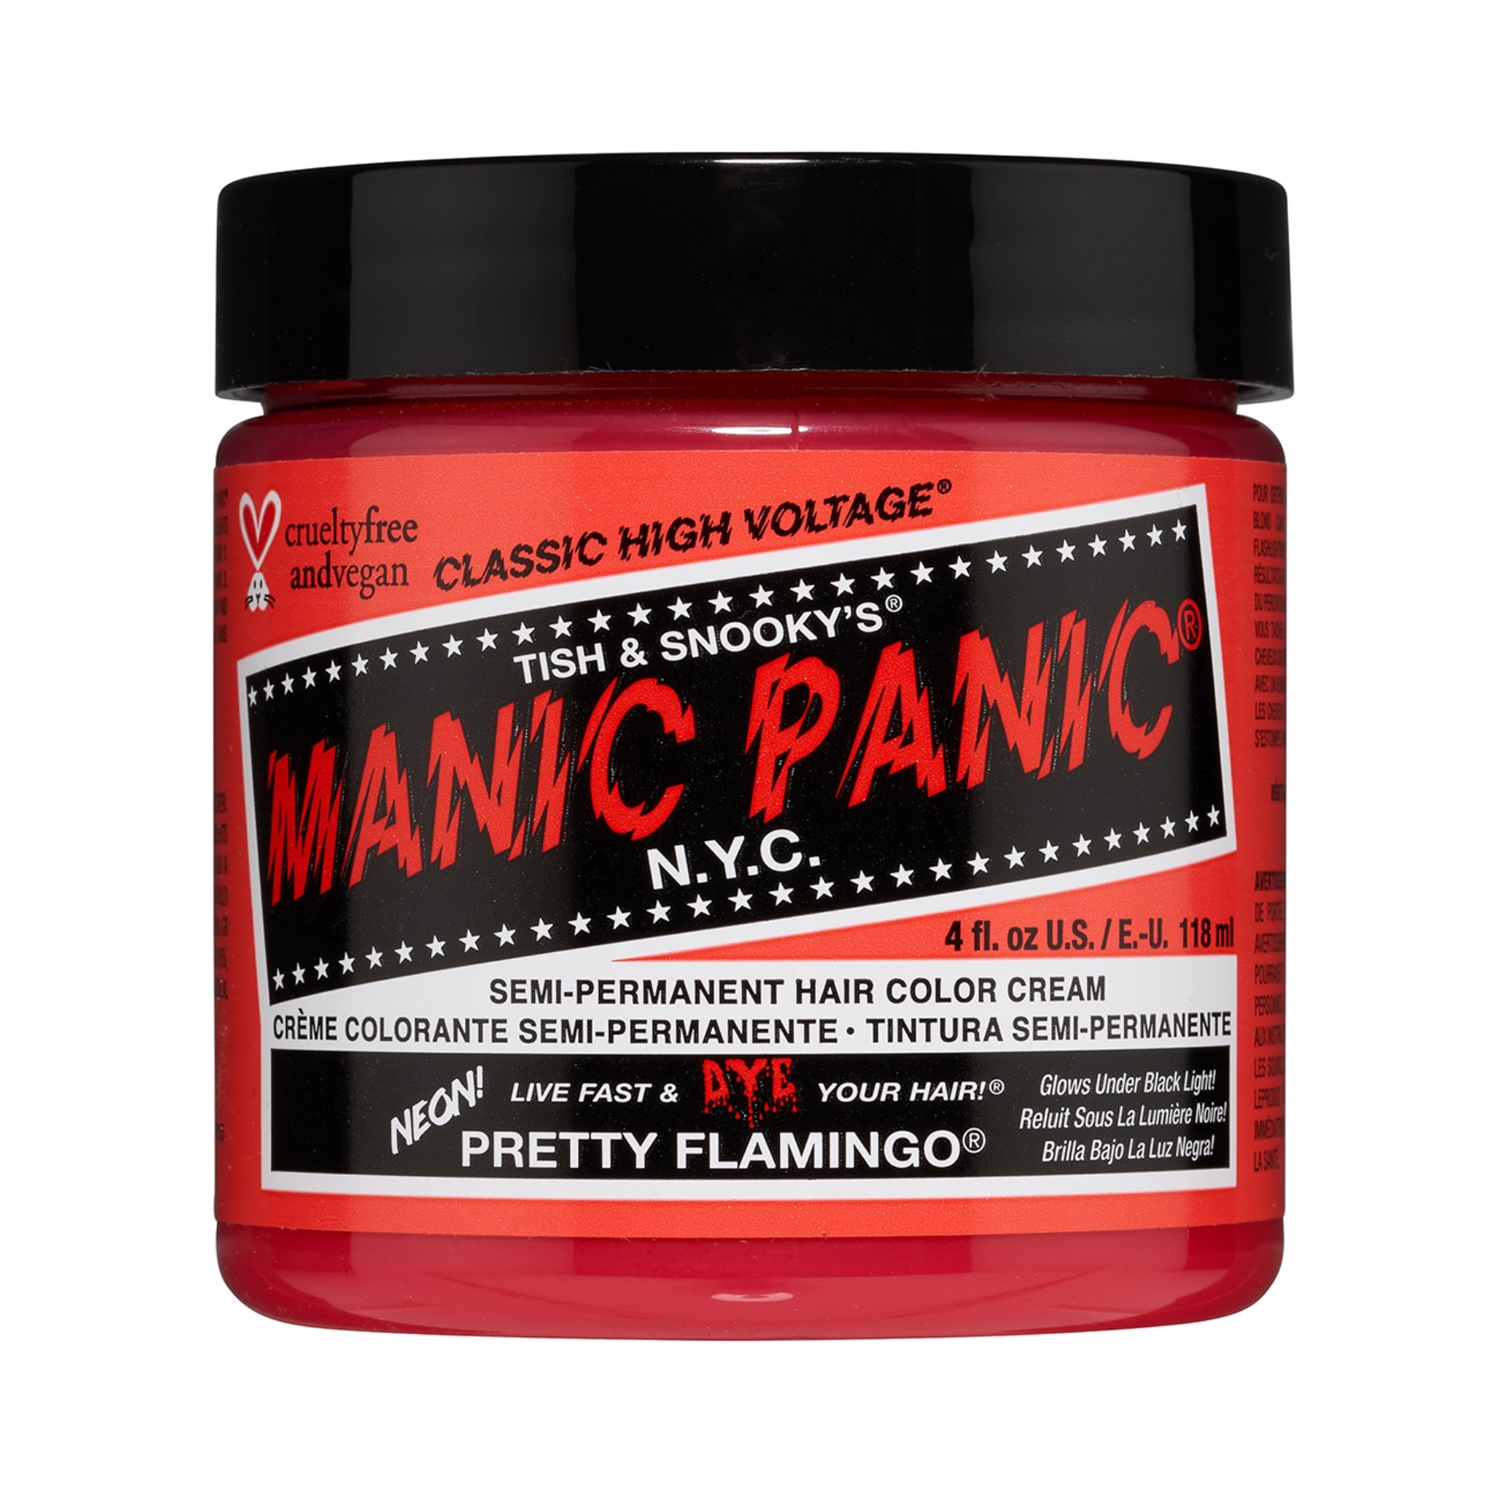 Manic Panic Classic High Voltage Semi Permanent Hair Color Cream - Pretty Flamingo (118ml)